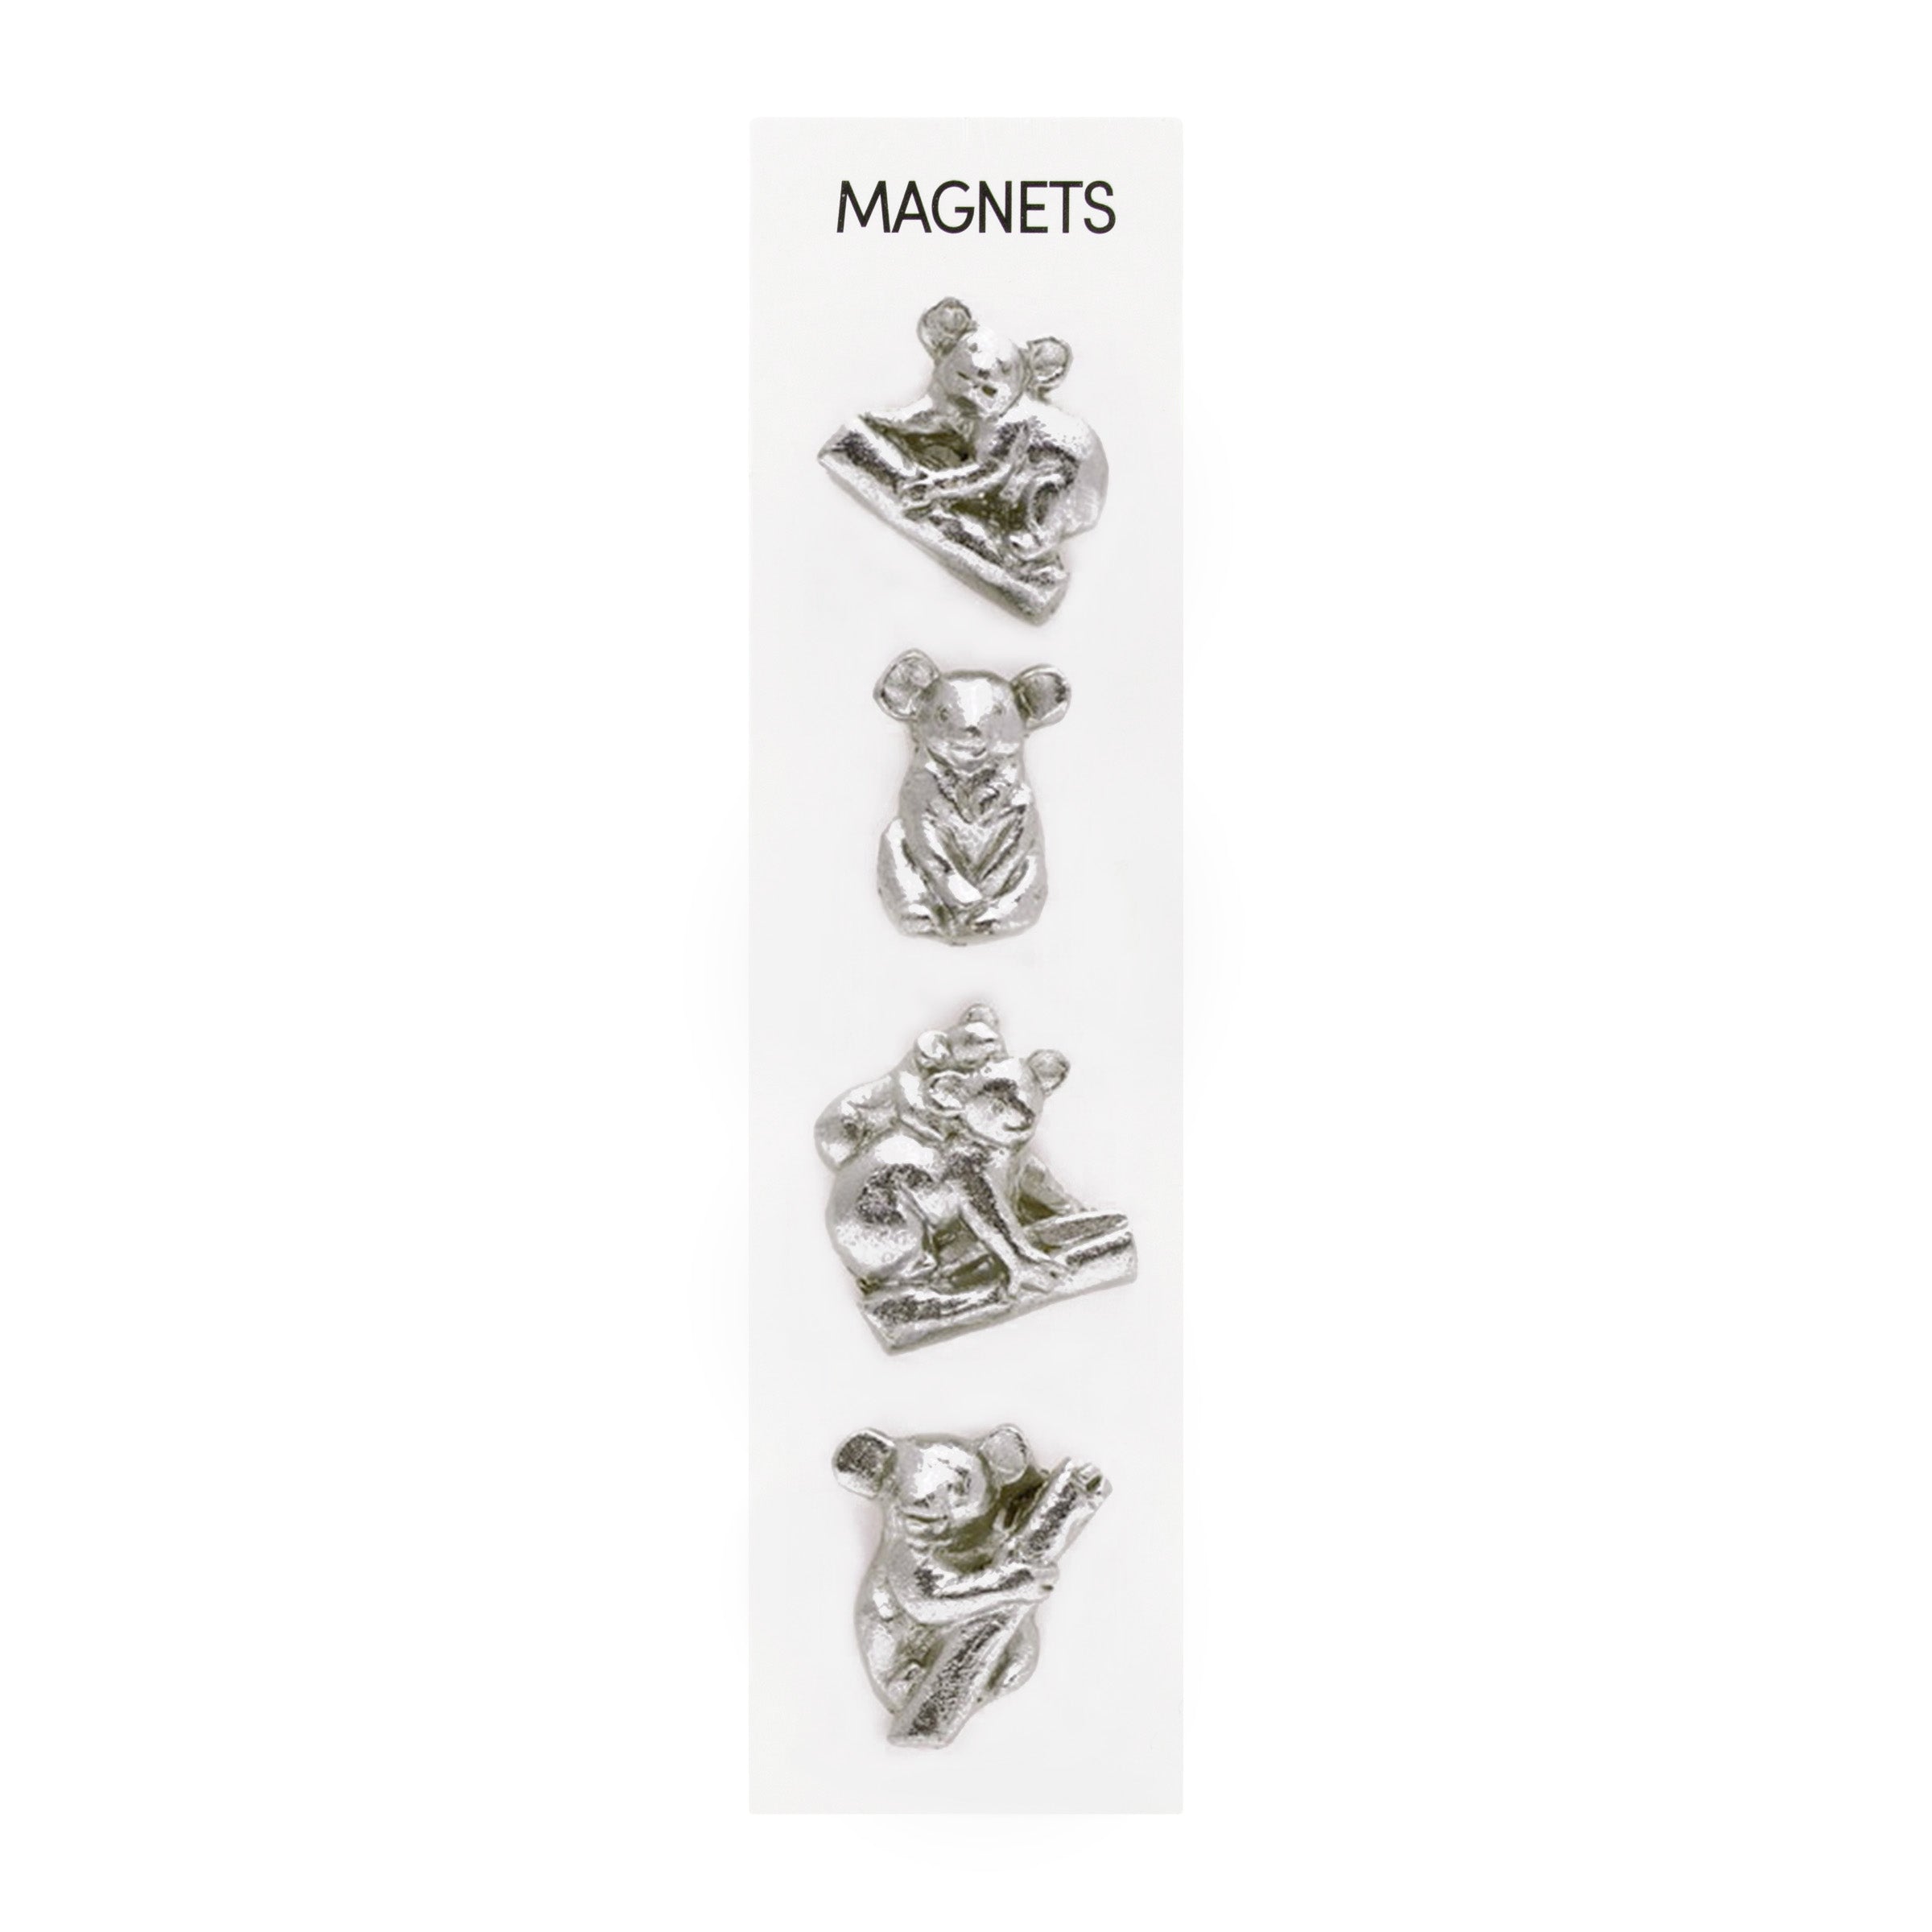 cast metal koala magnets